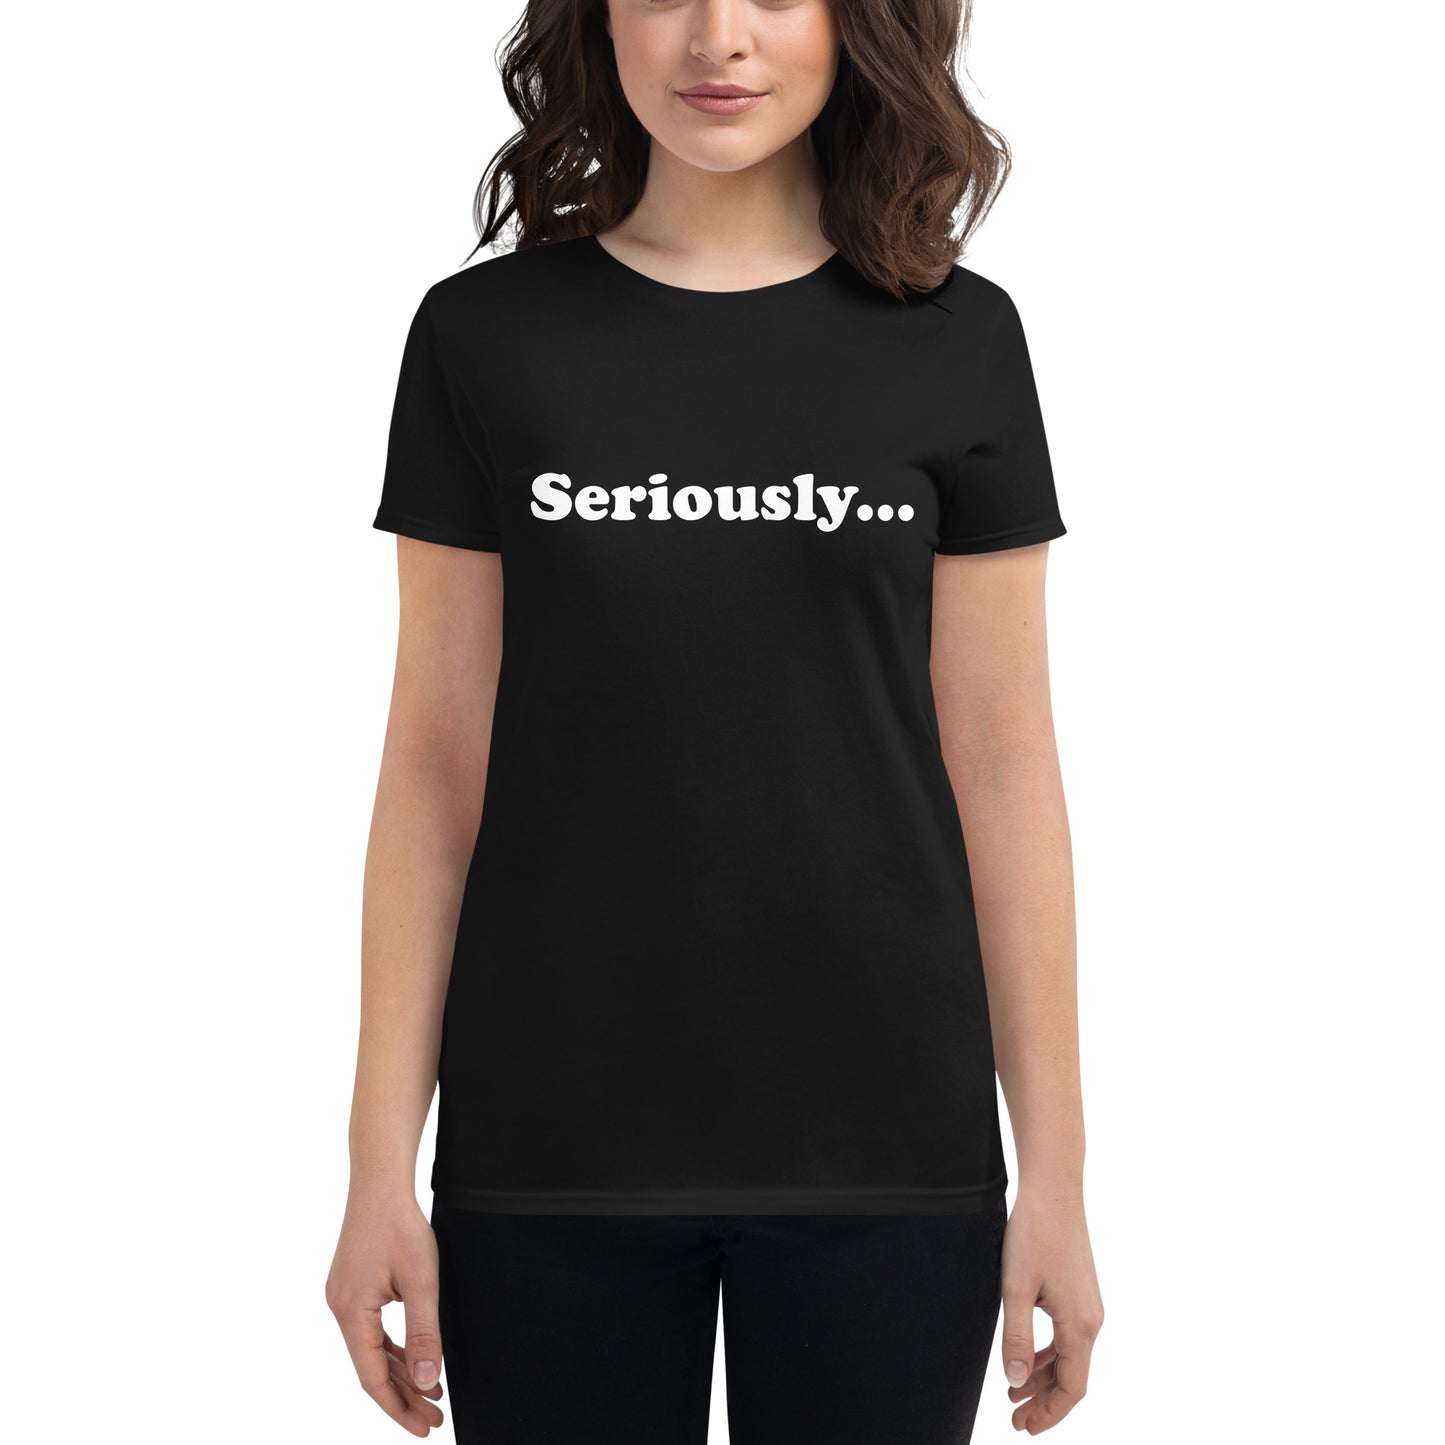 Seriously... women's T-shirt